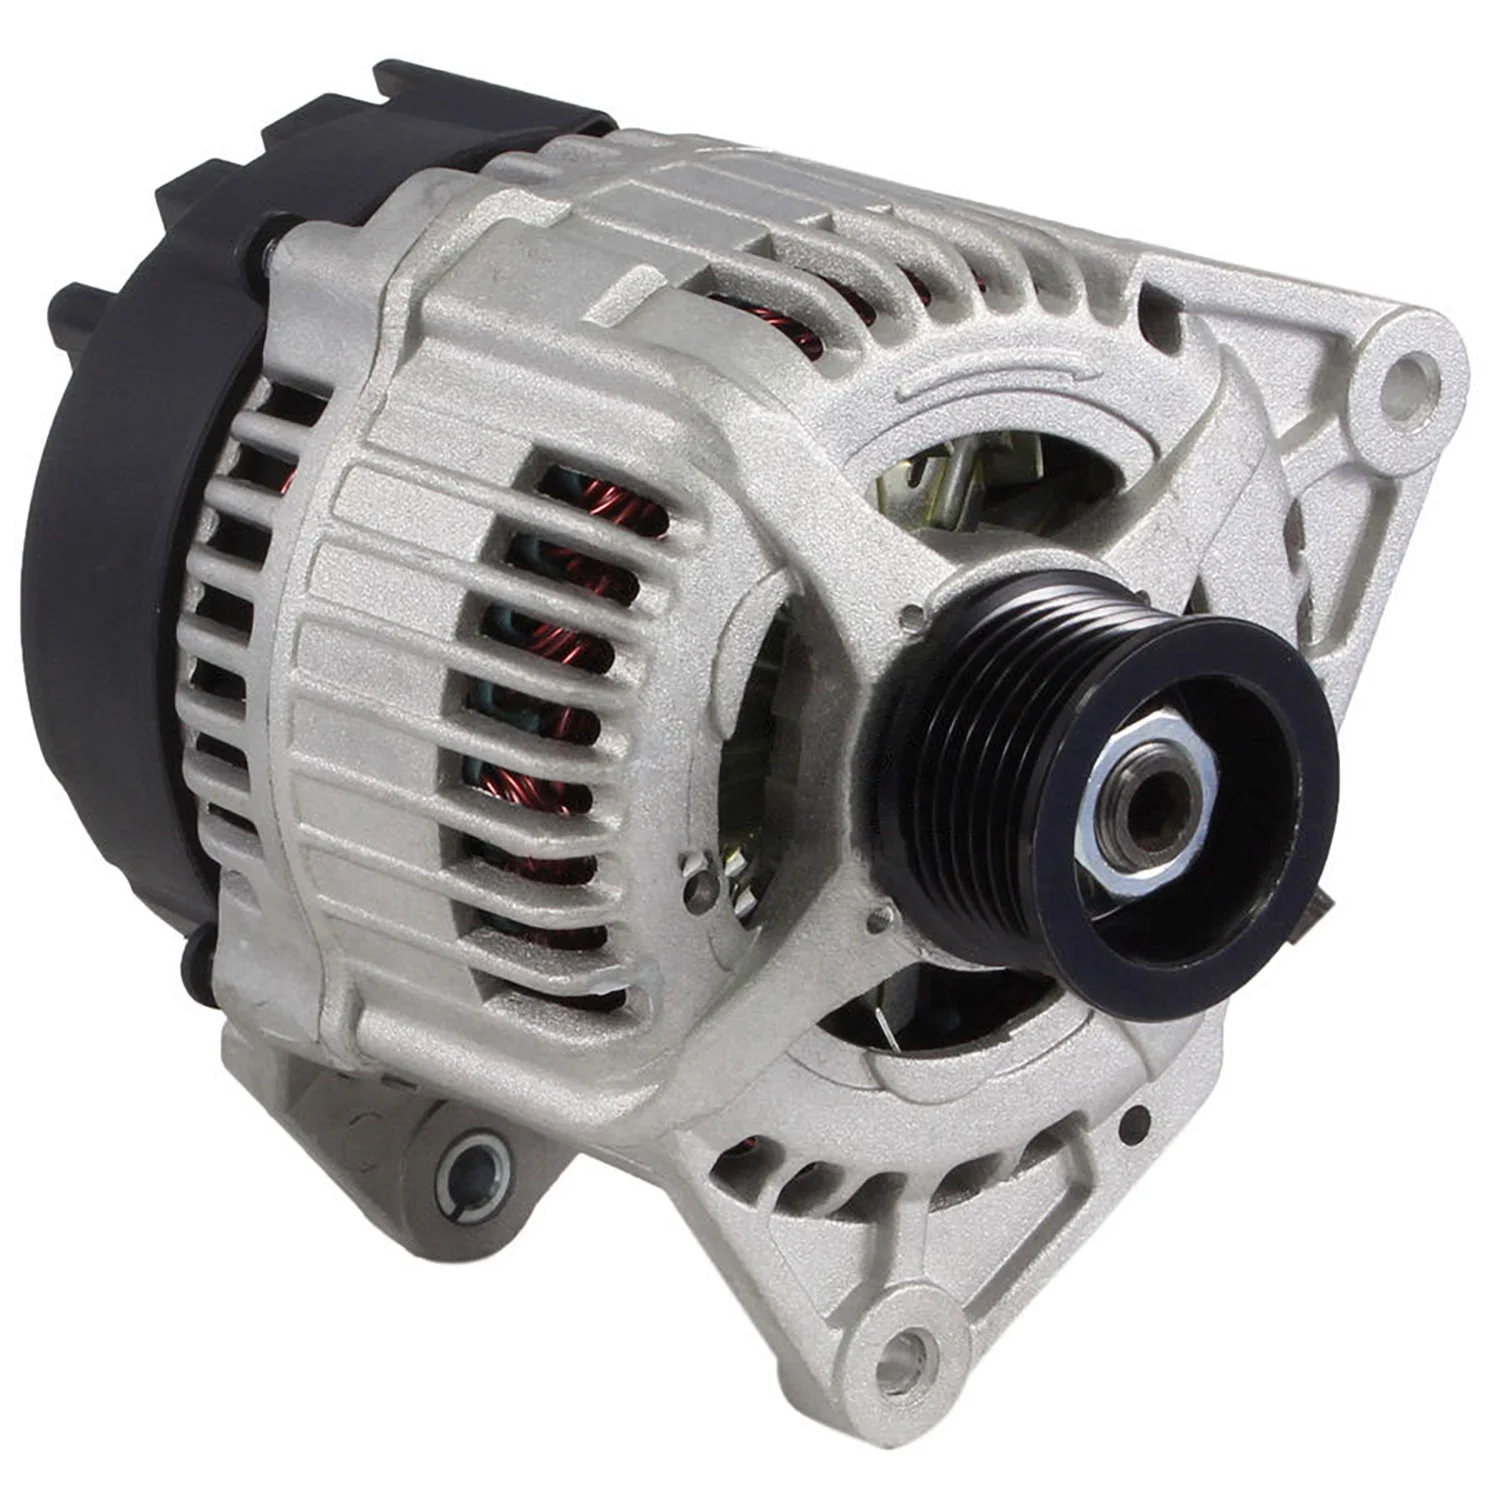 

Auto Dynamo Alternator Generator For BSH Delco Iskr Lan Rove Lucas 0986044761 112021 CAL30159 DRA3587 CA1337IR 8EL012426851